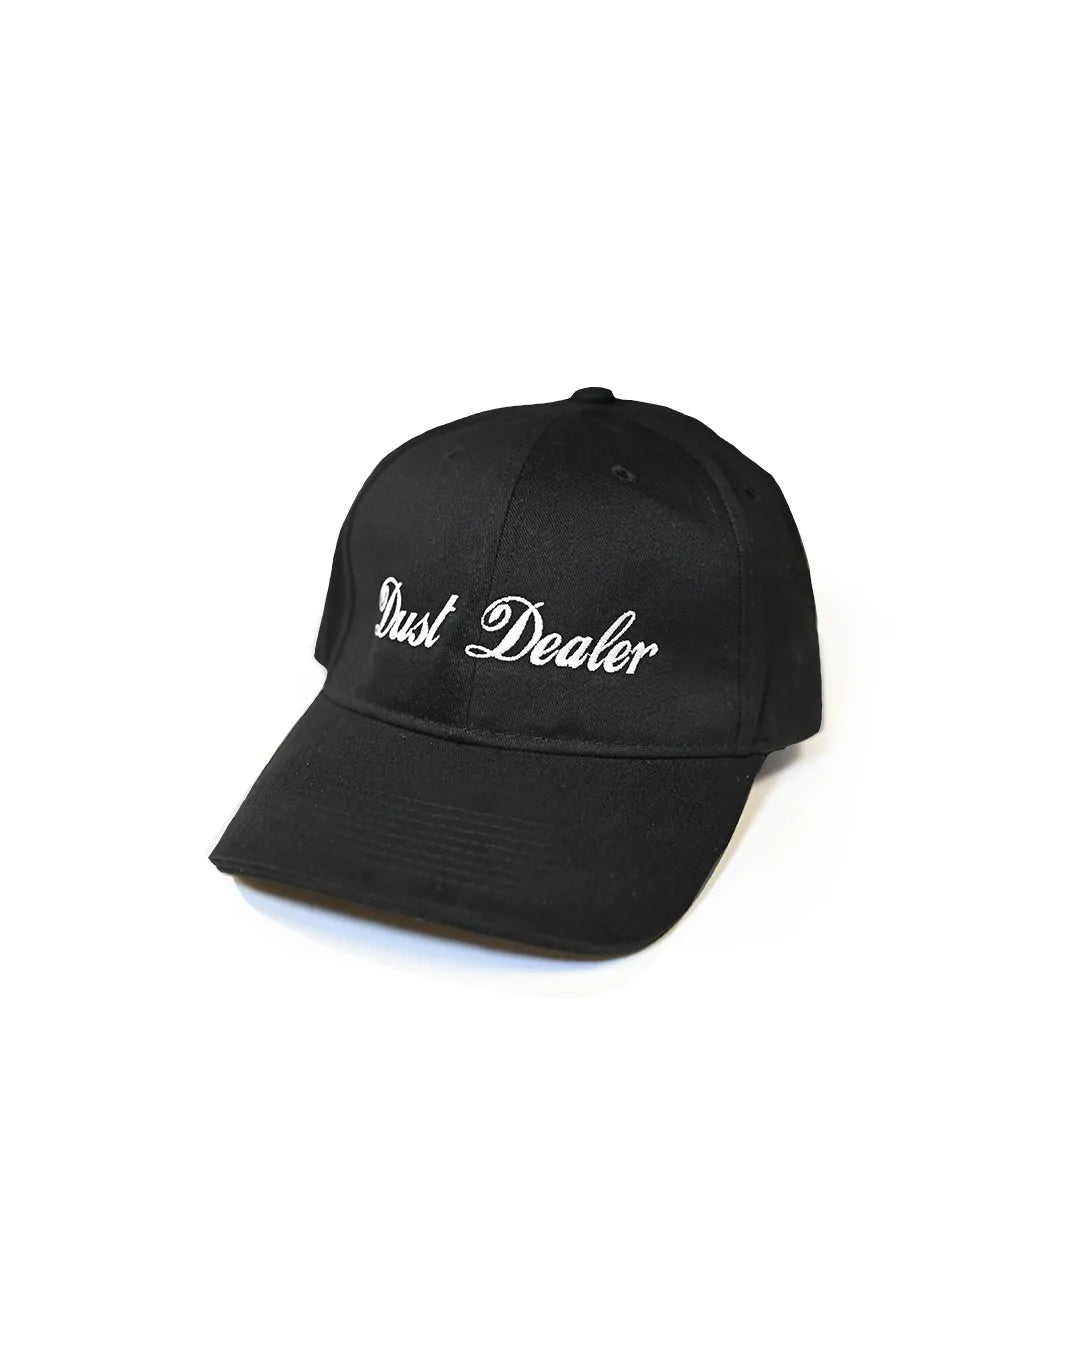 Dust Dealer Hat